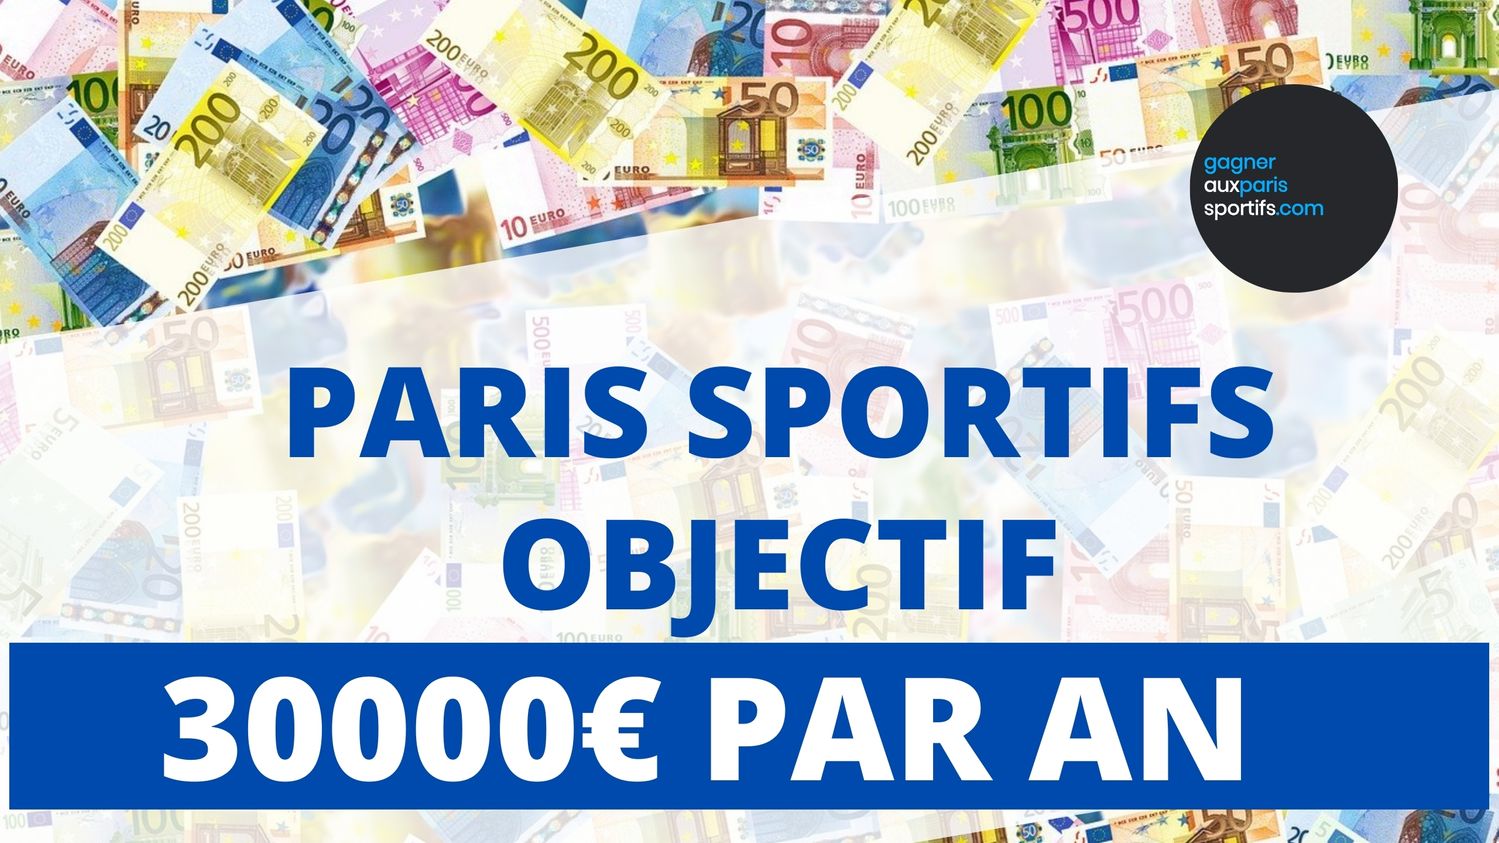 Objectif 30000€ par an avec les paris sportifs (Bilan mars 2021)